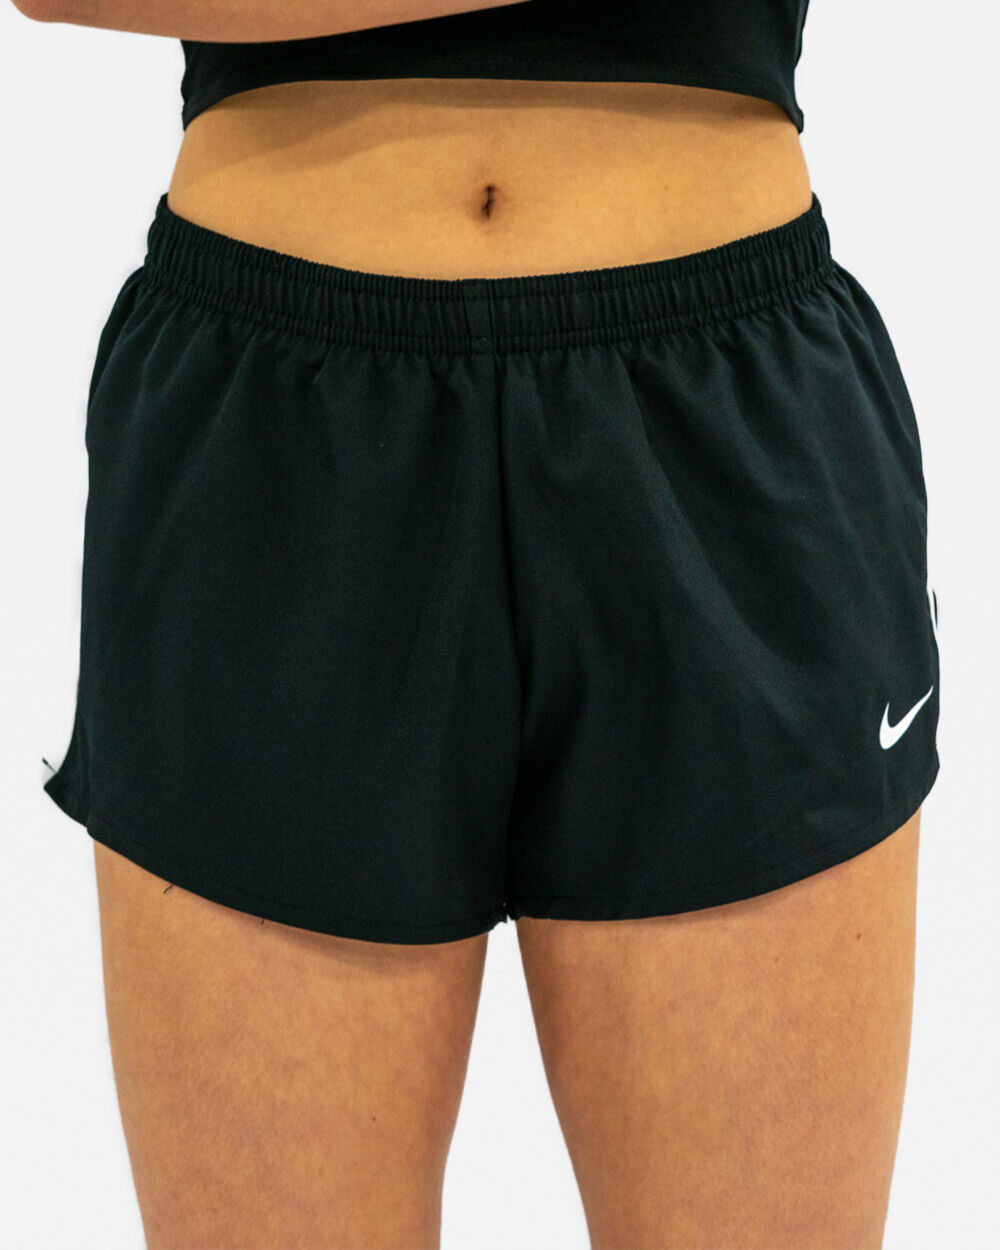 Pantalón corto para correr Nike Stock Negro Mujeres - NT0304-010